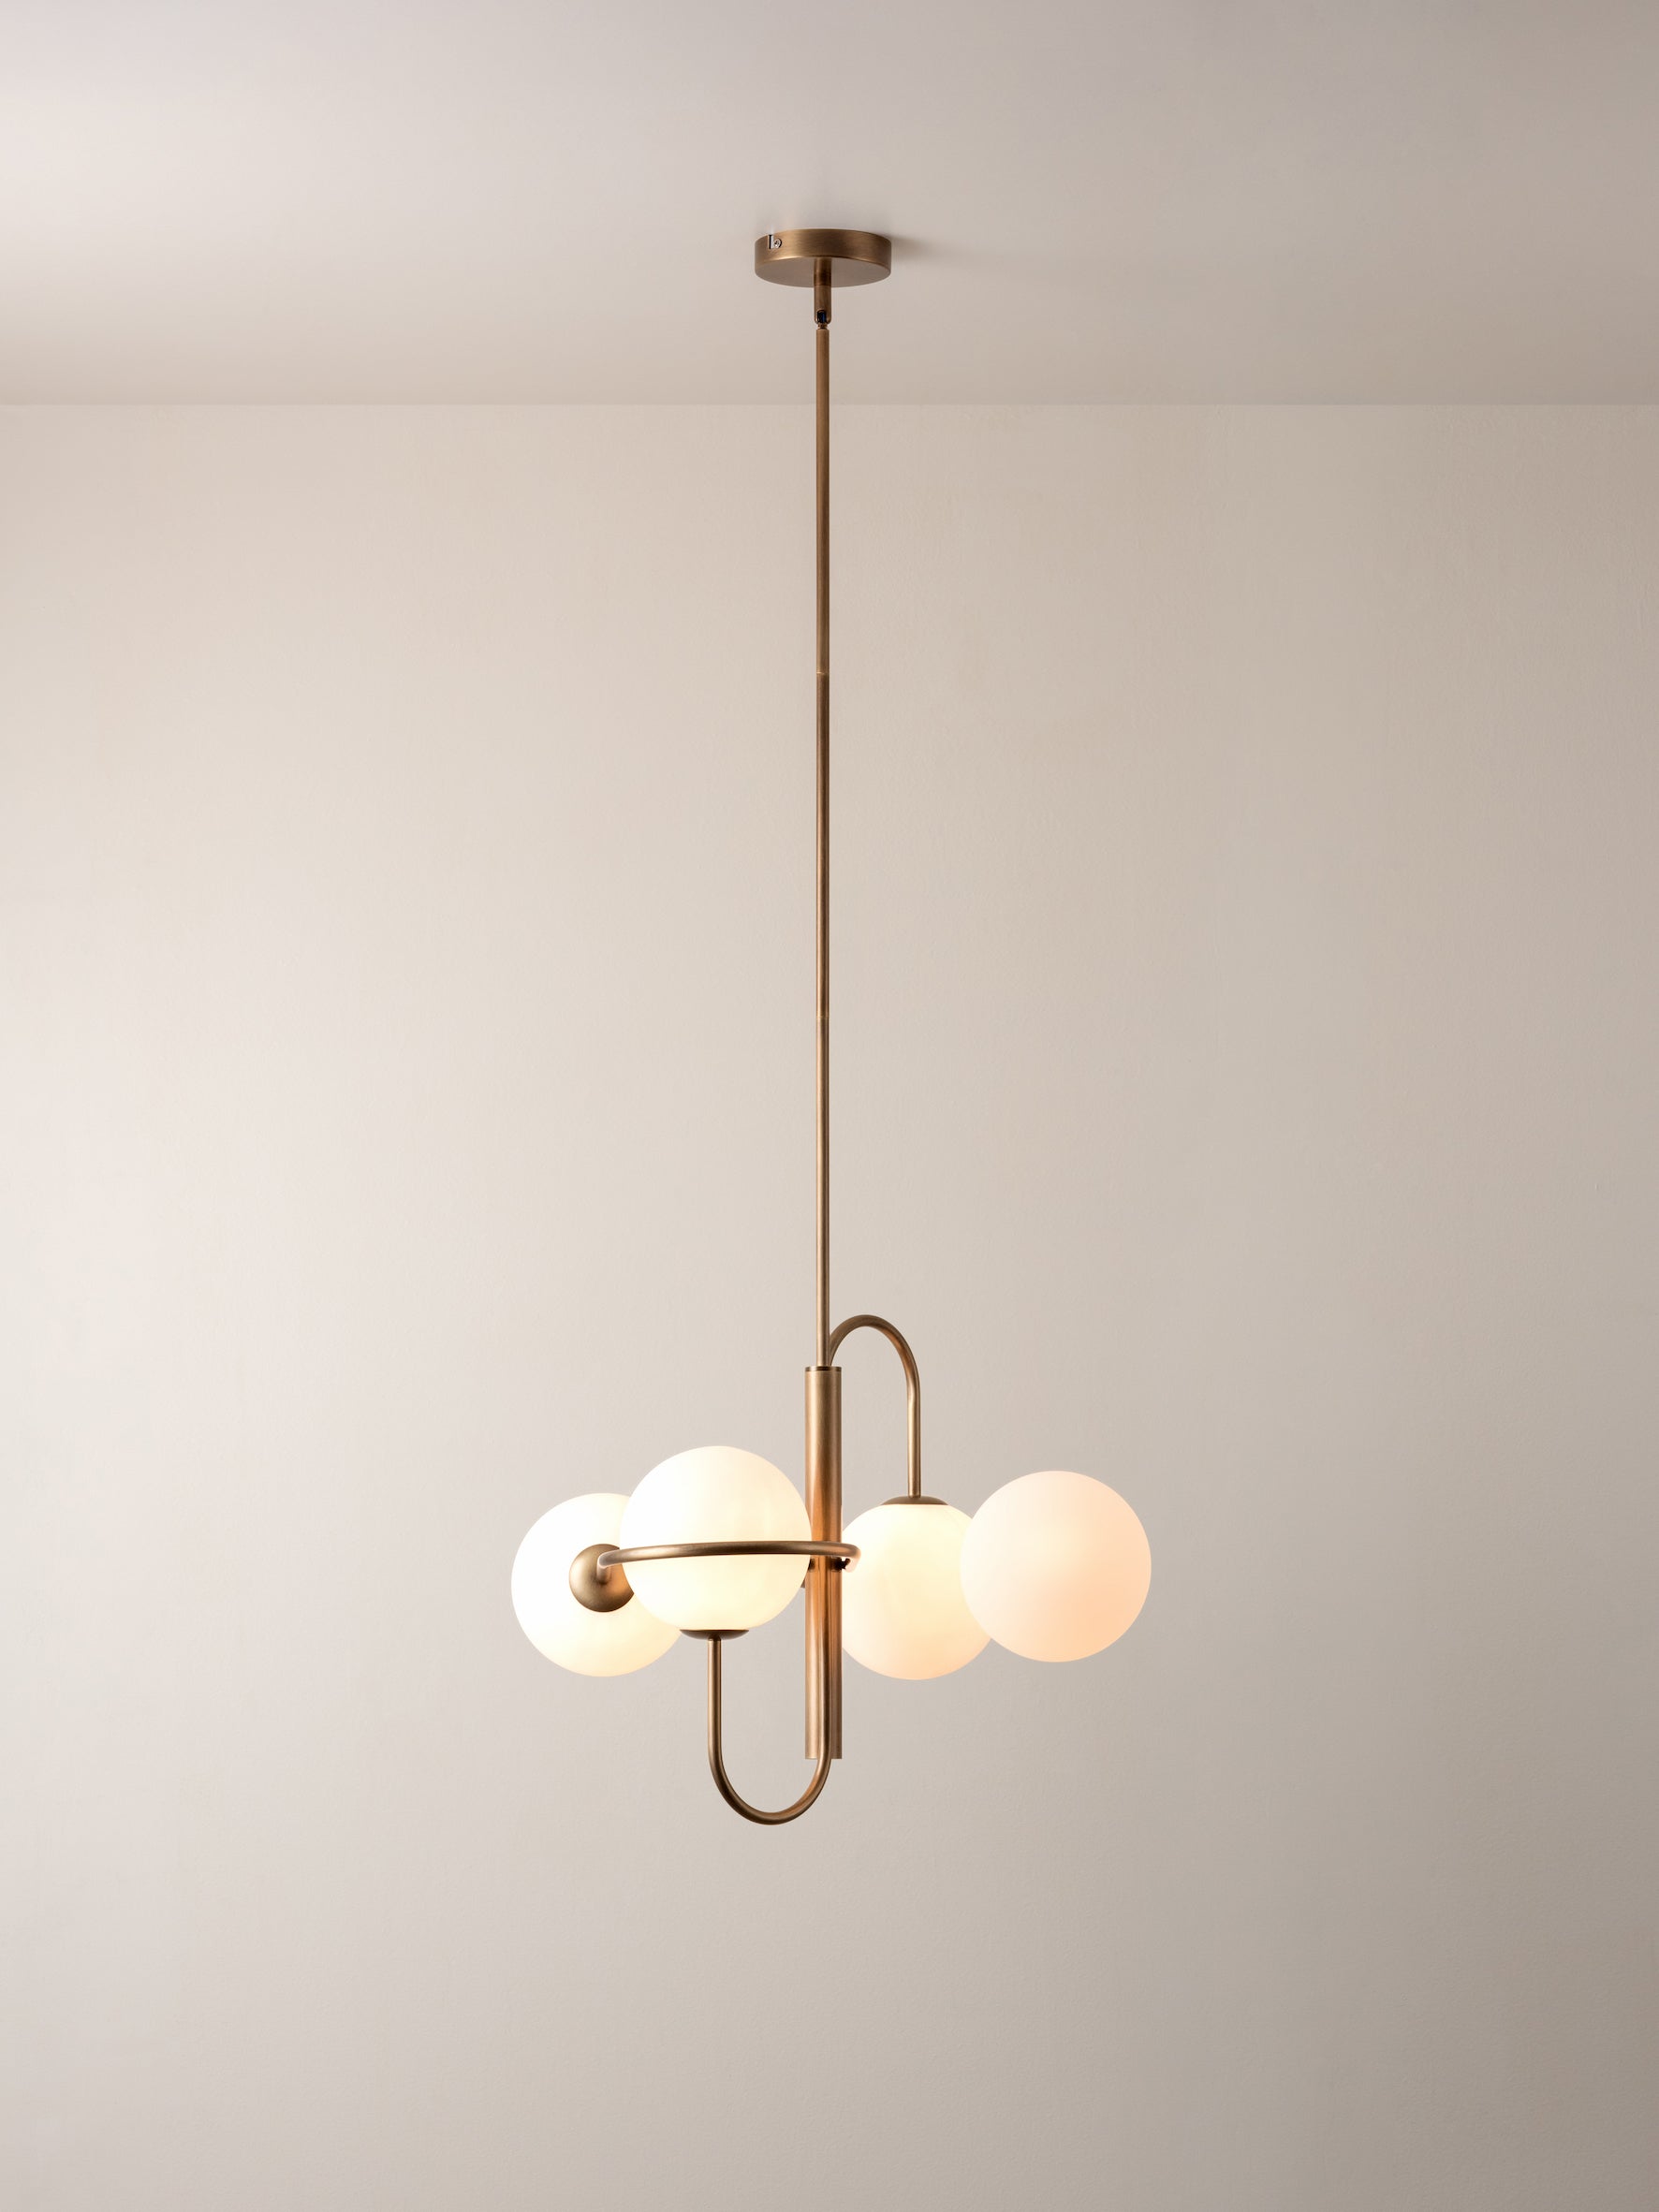 Decora - 4 light aged brass and opal pendant | Ceiling Light | Lights & Lamps Inc | Modern Affordable Designer Lighting | USA